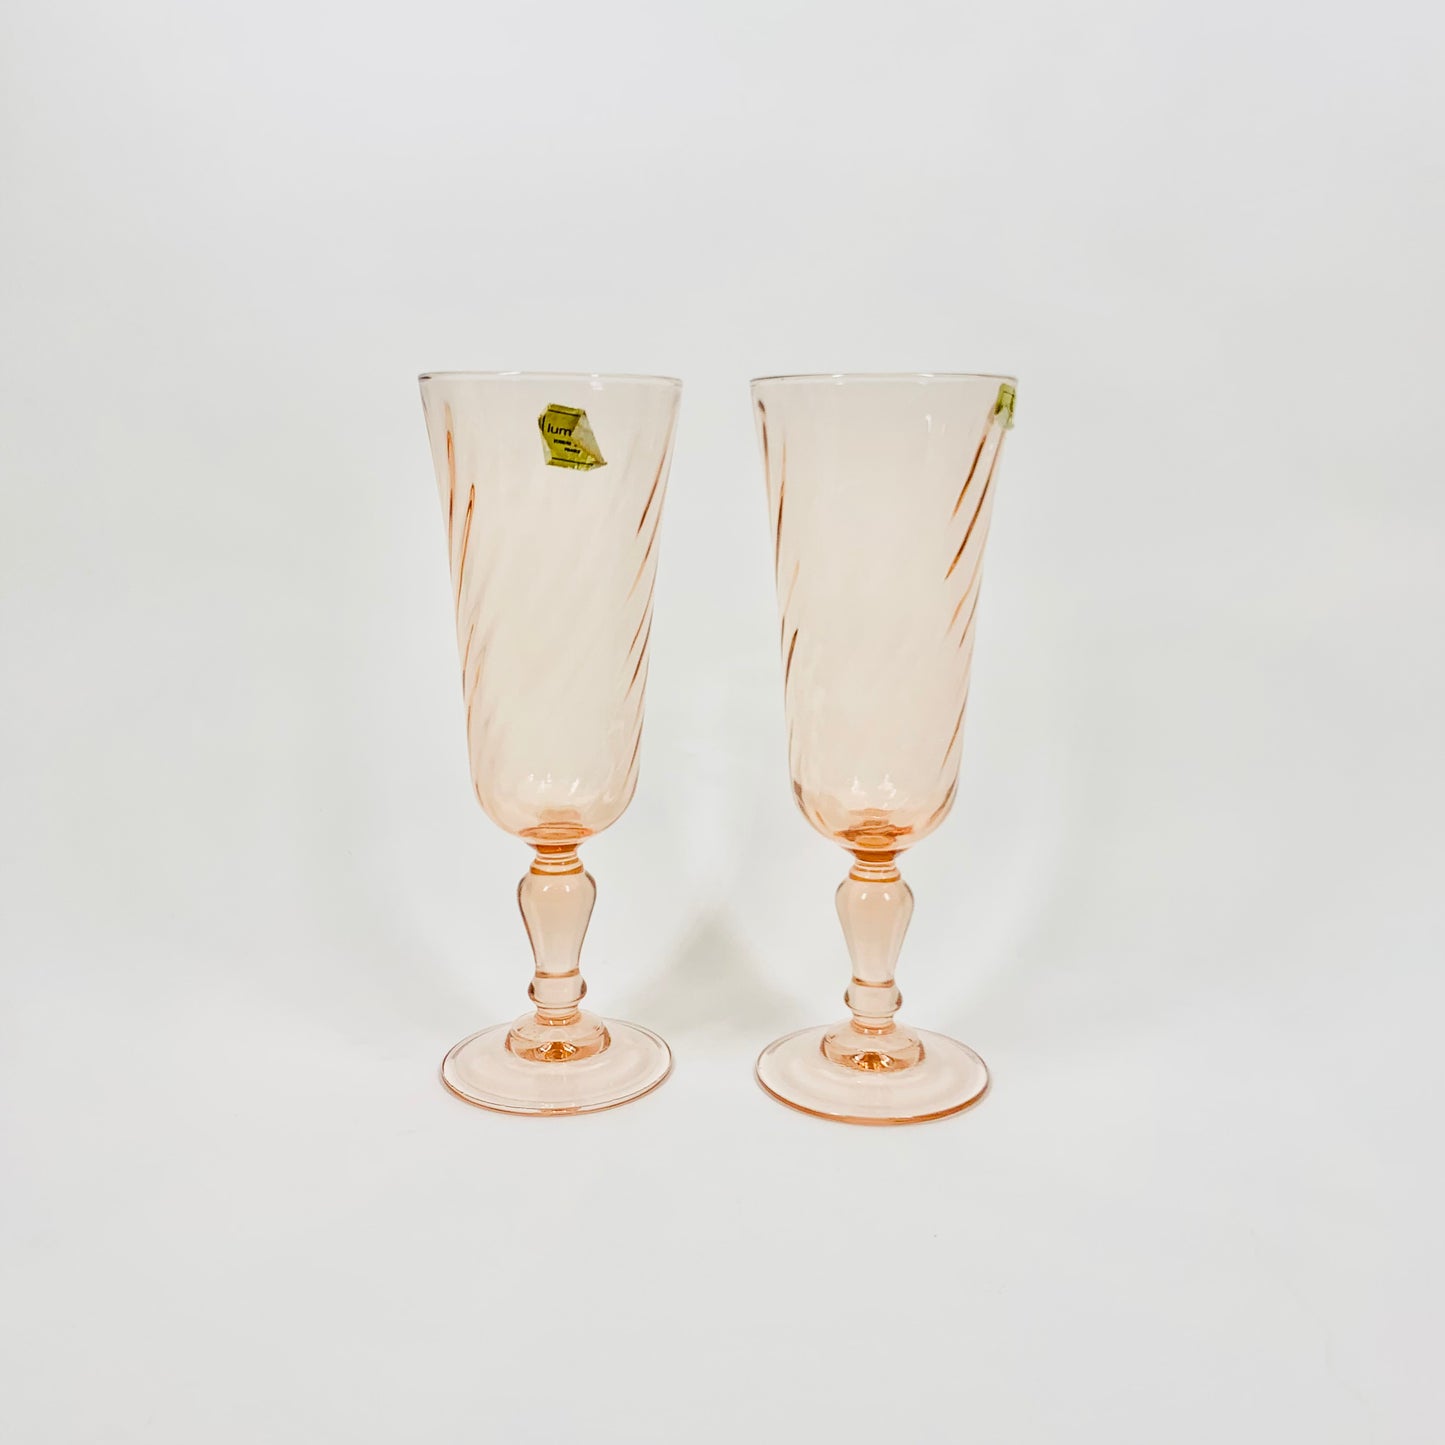 Extremely rare Midcentury French Luminarc rosaline glasses